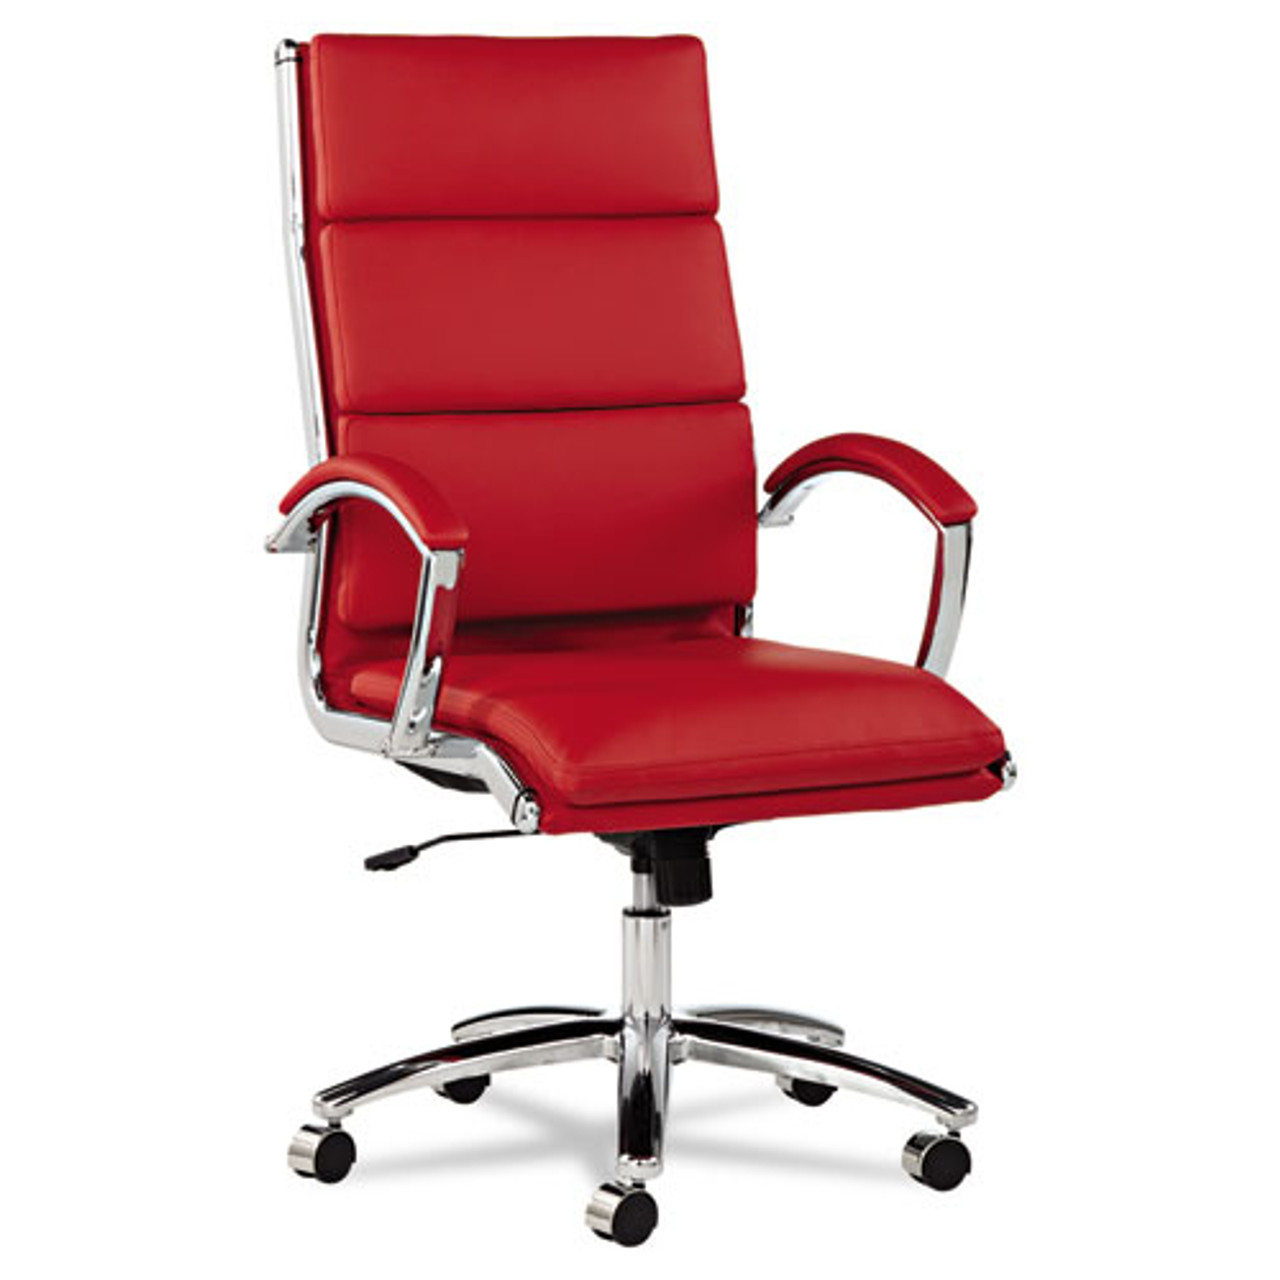 Alera Neratoli Series Highback Swivel/tilt Chair, Red Soft Leather, Chrome Frame, #AL-1159